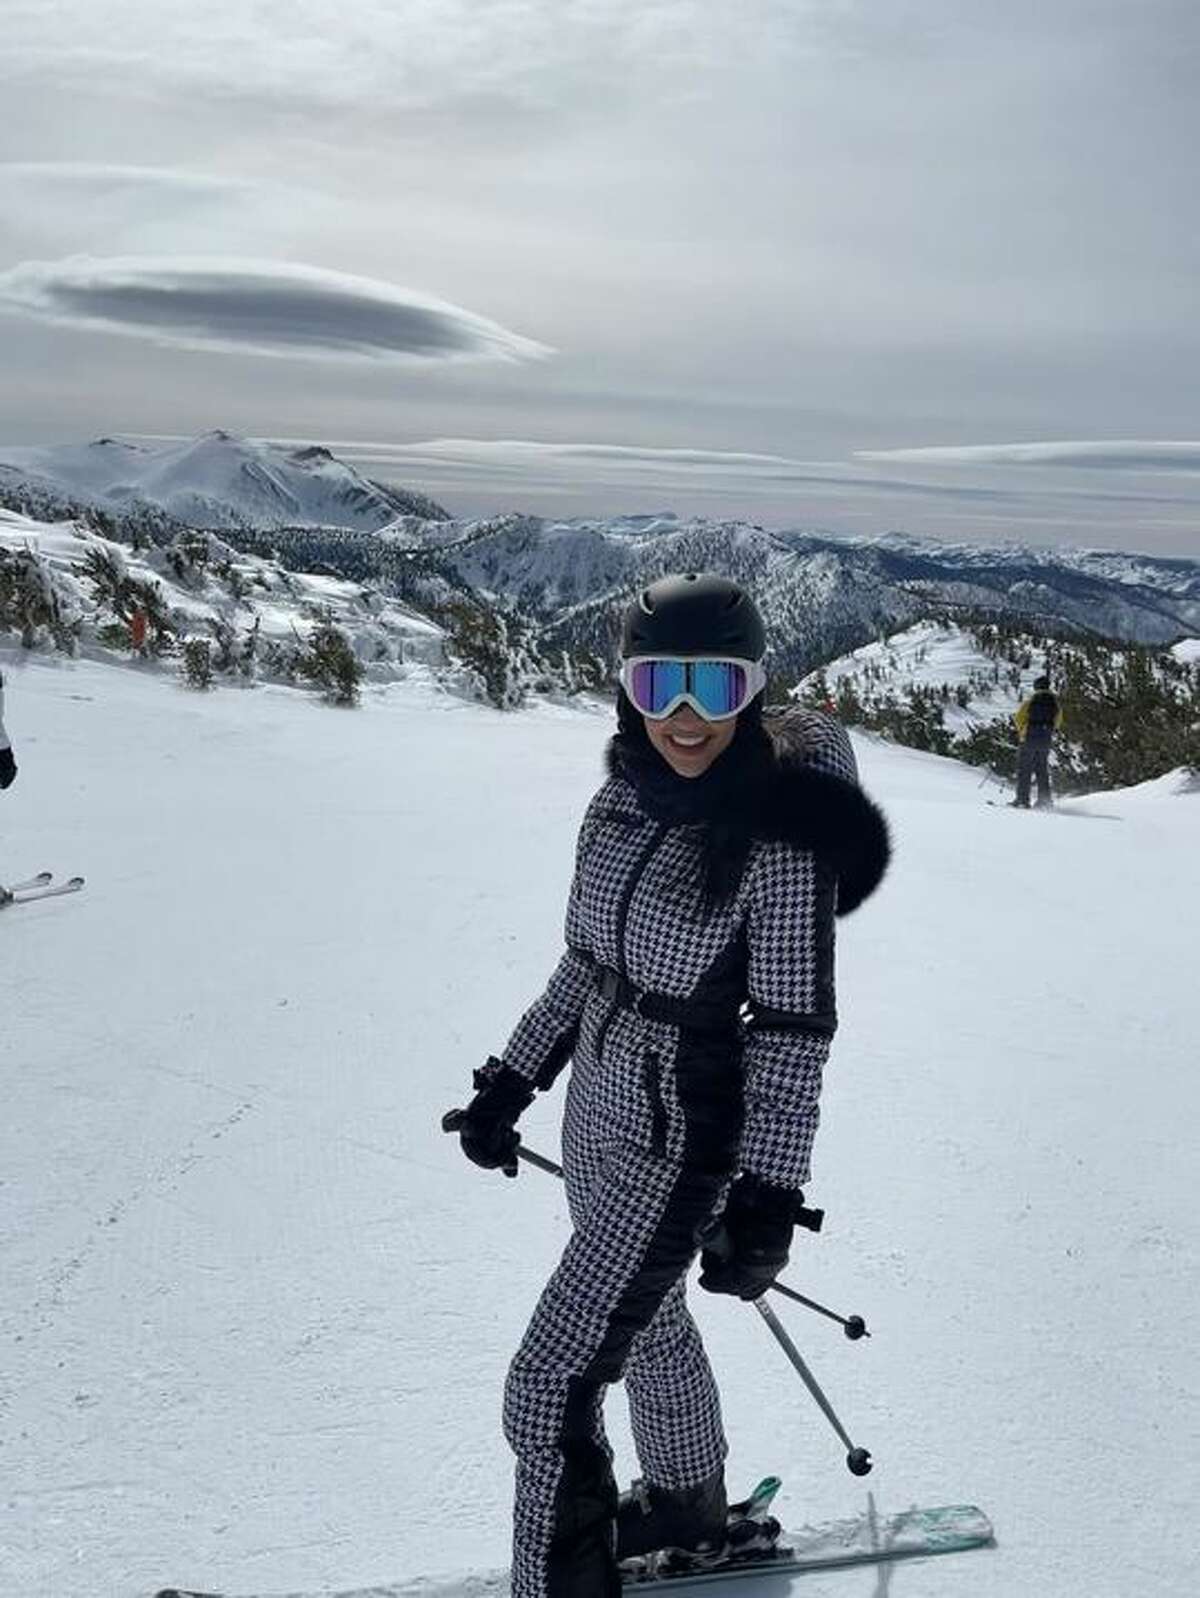 KGO-TV新闻记者Luz Pena事故前在天堂滑雪场。